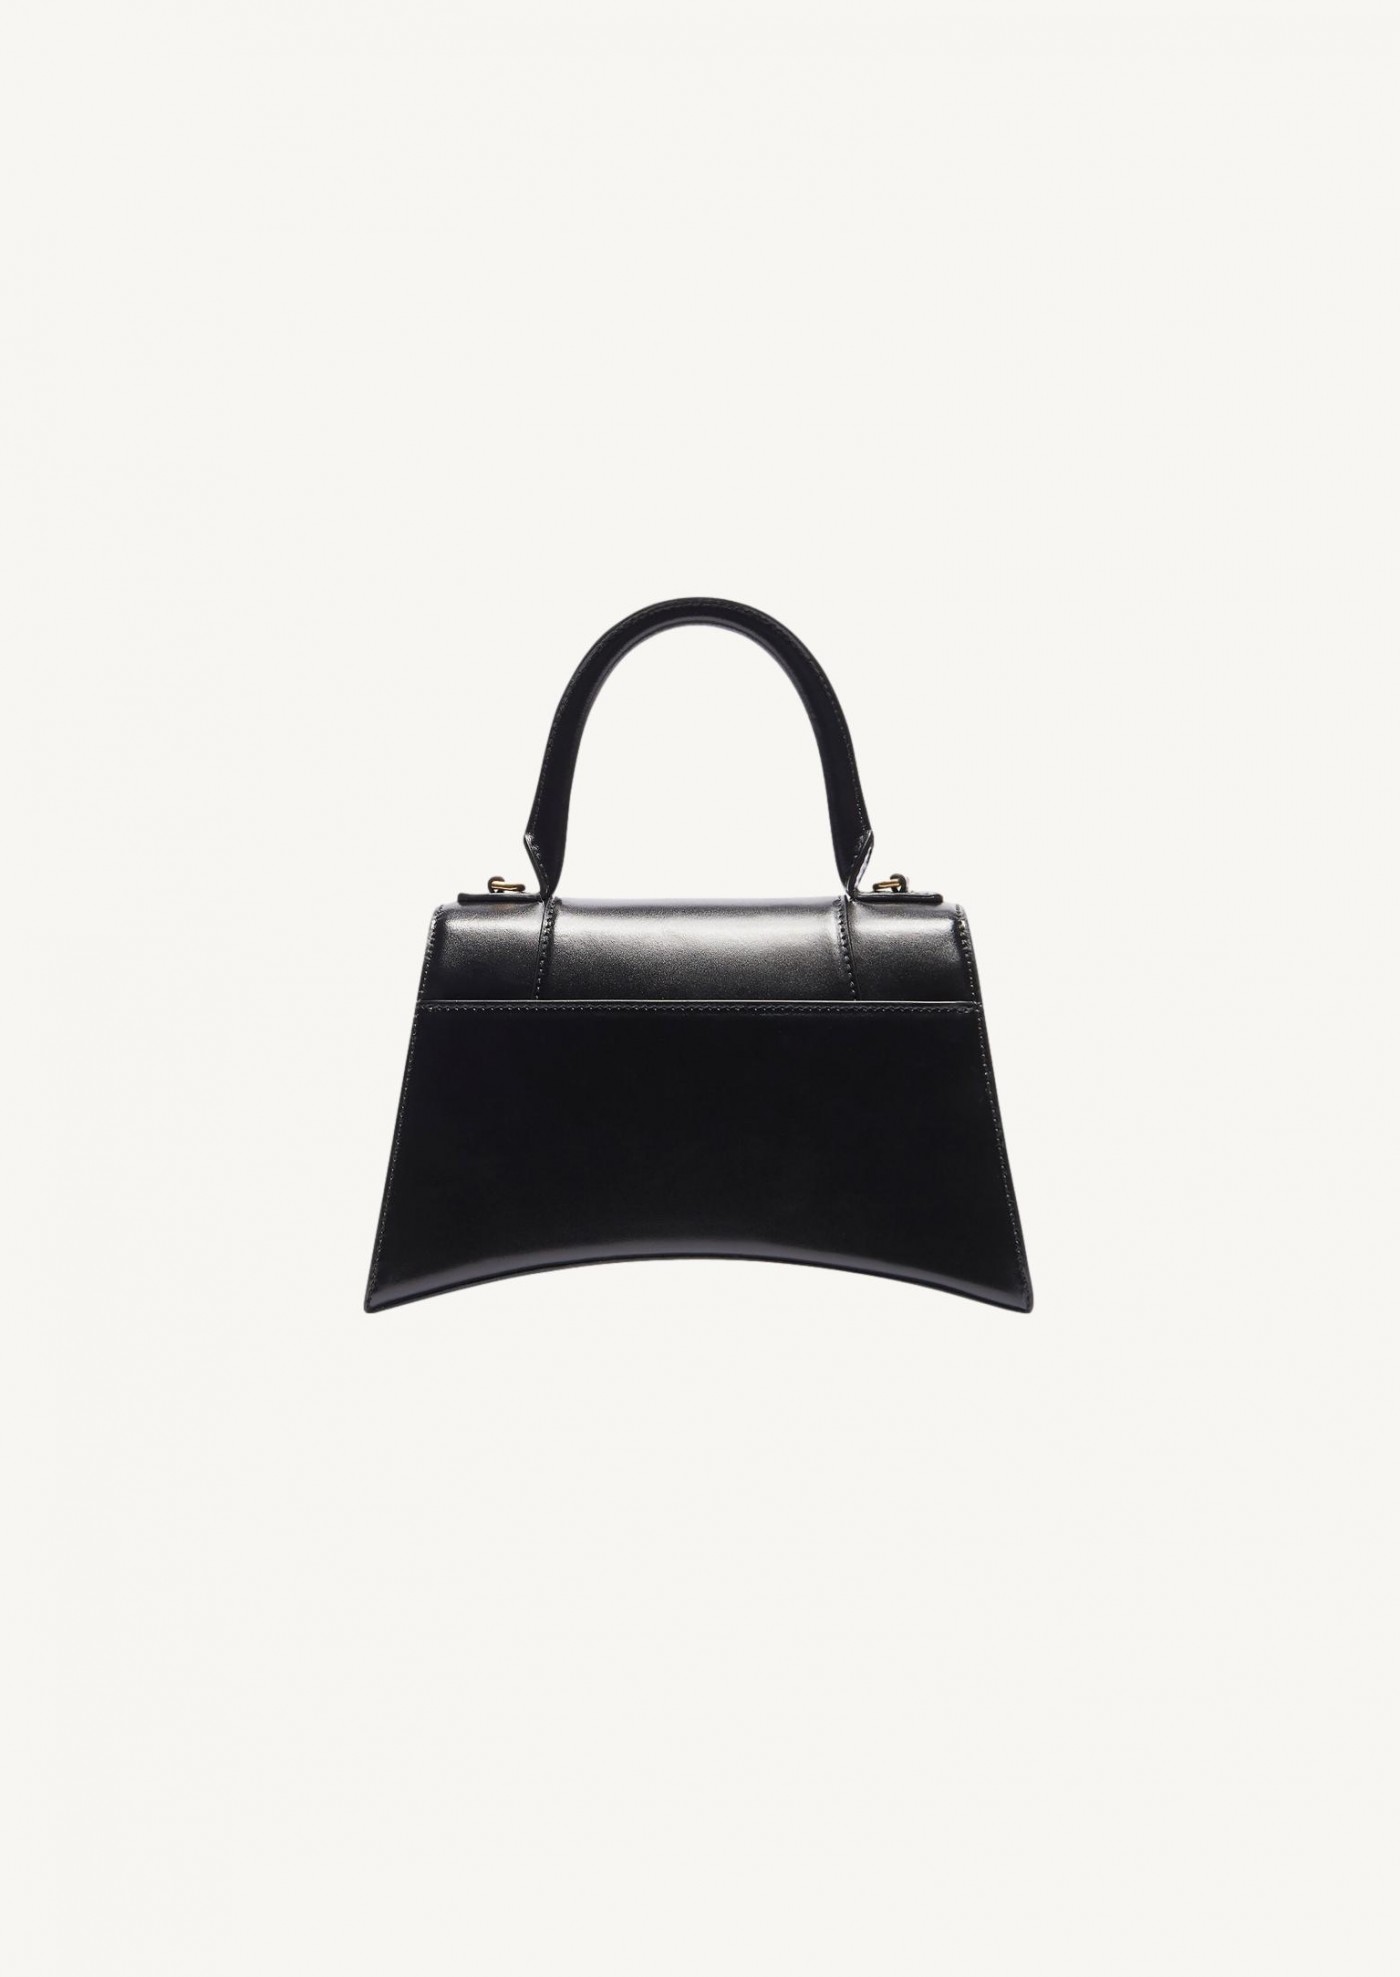 Women's hourglass small handbag in box in black